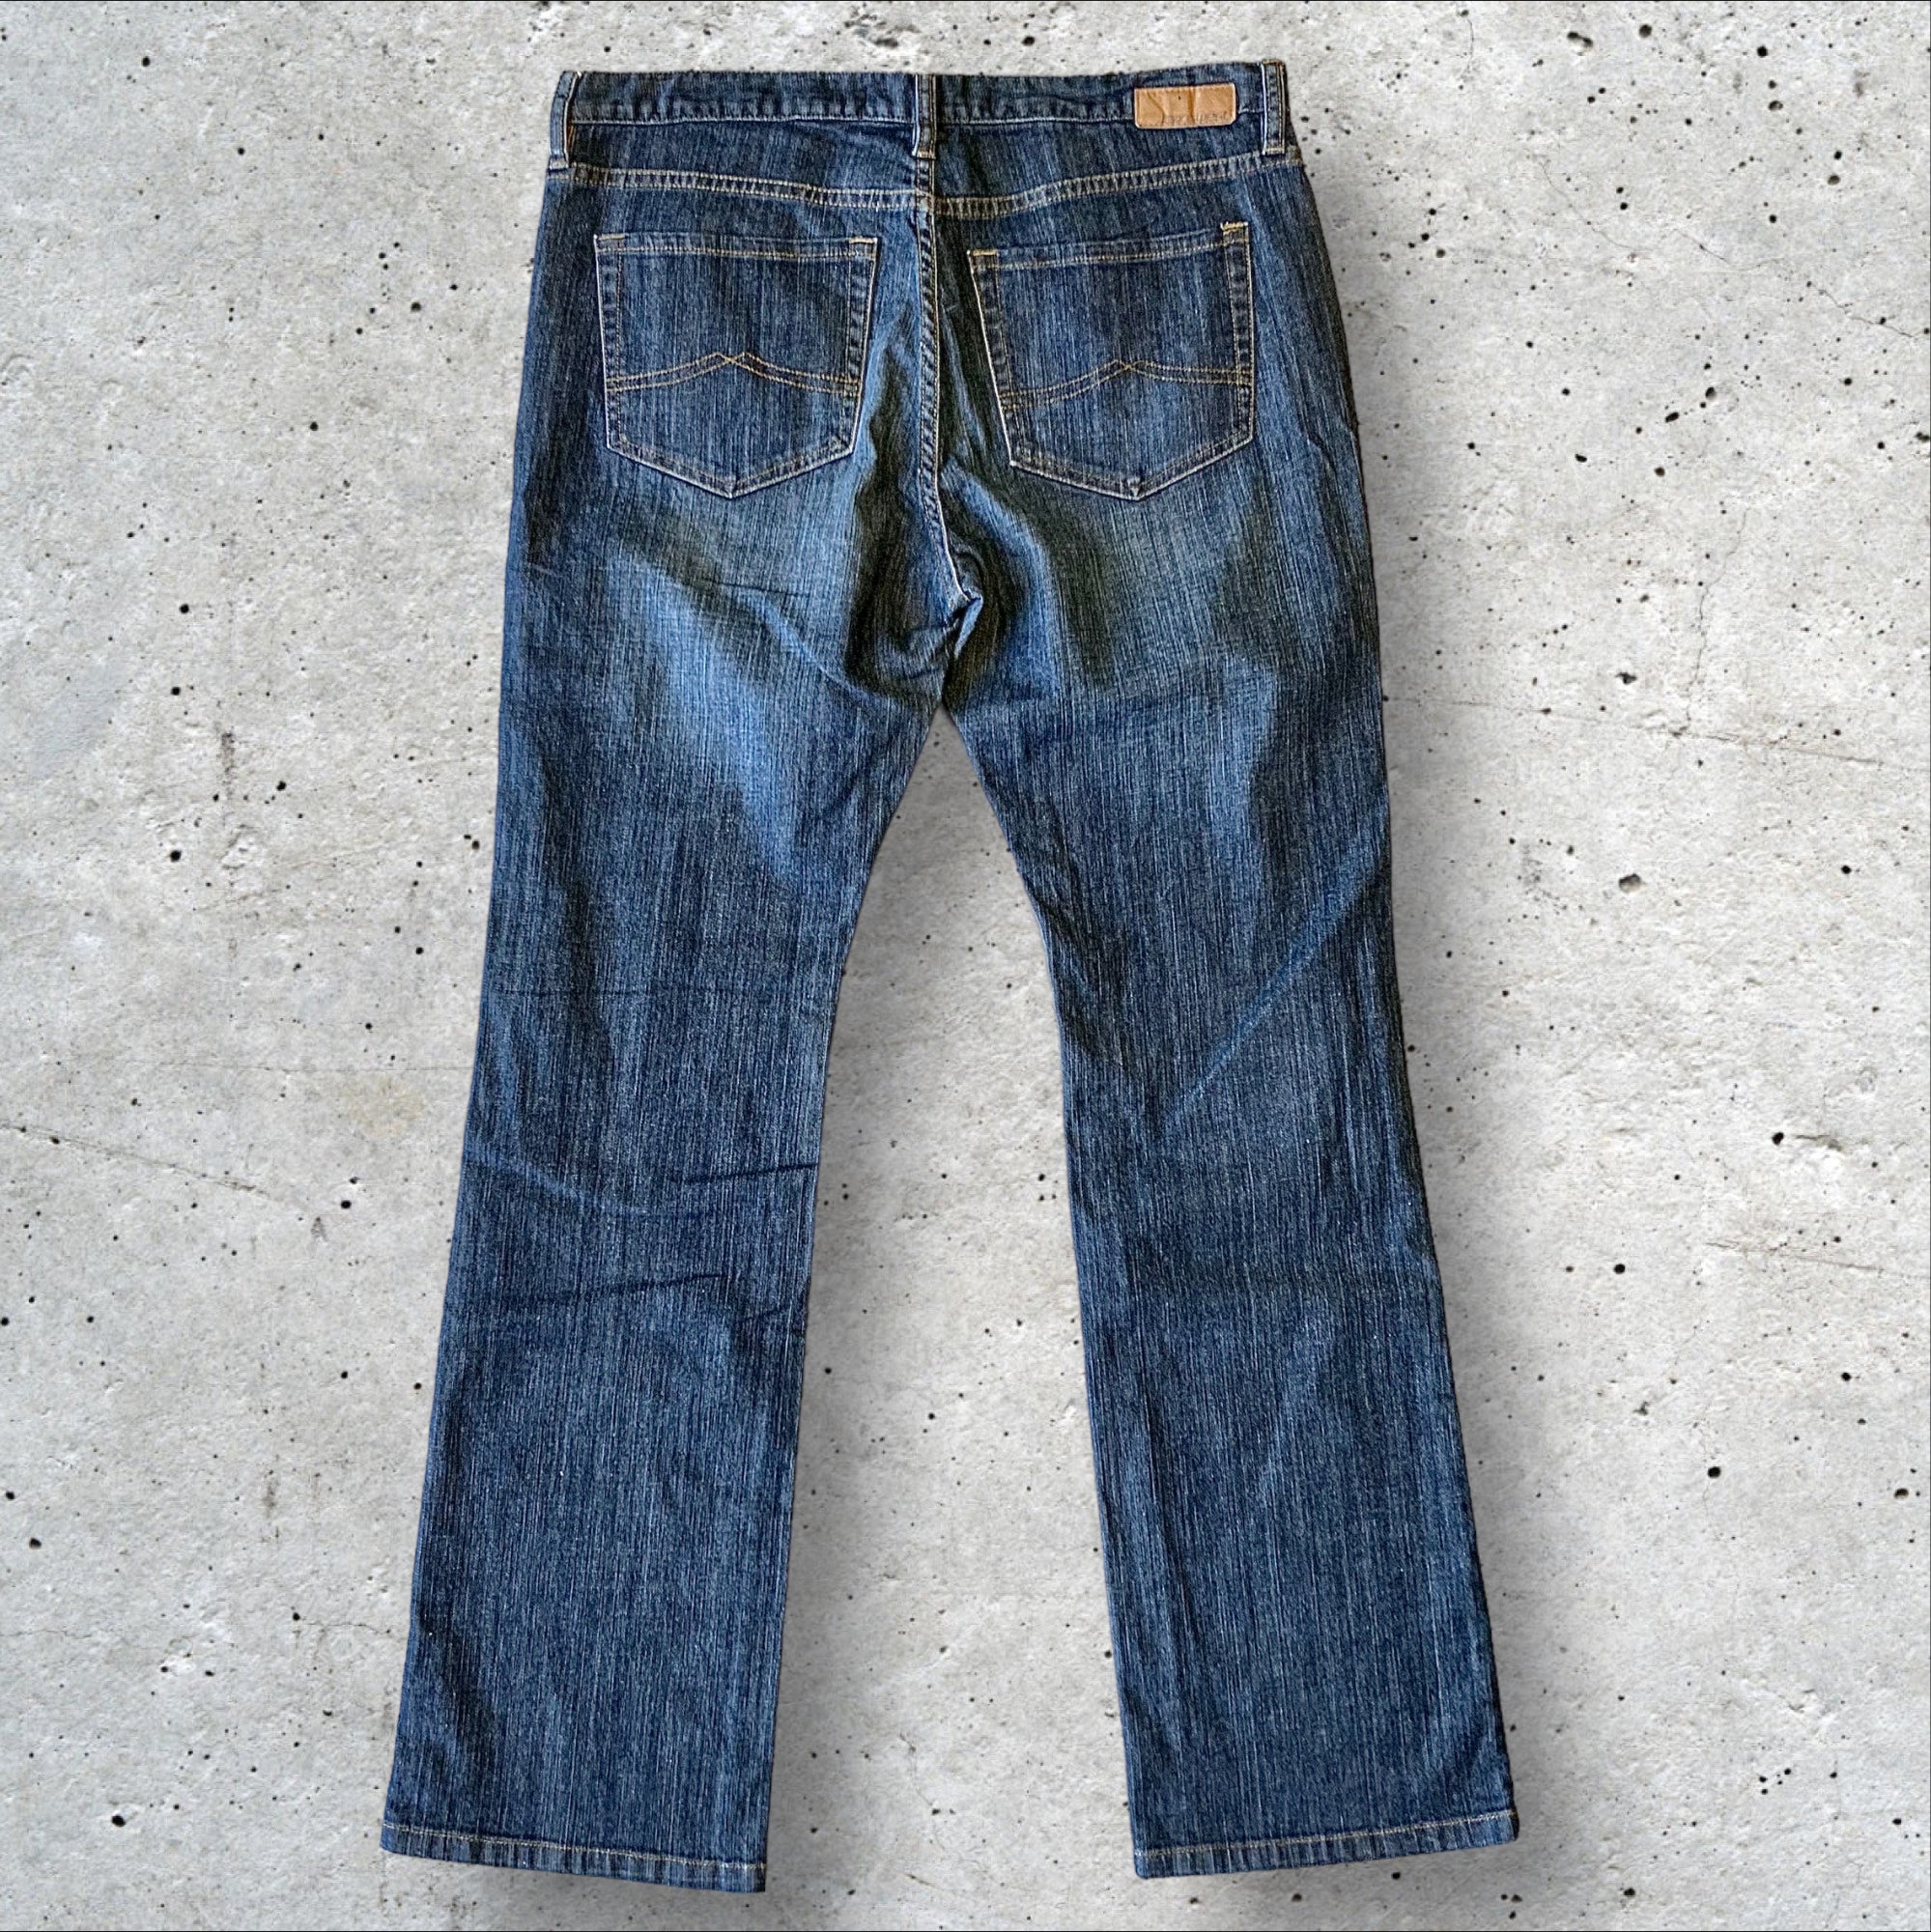 JEANSWEST ' Tummy Trimmer' Size 16 Bootcut Indigo Blue Jeans Size 16